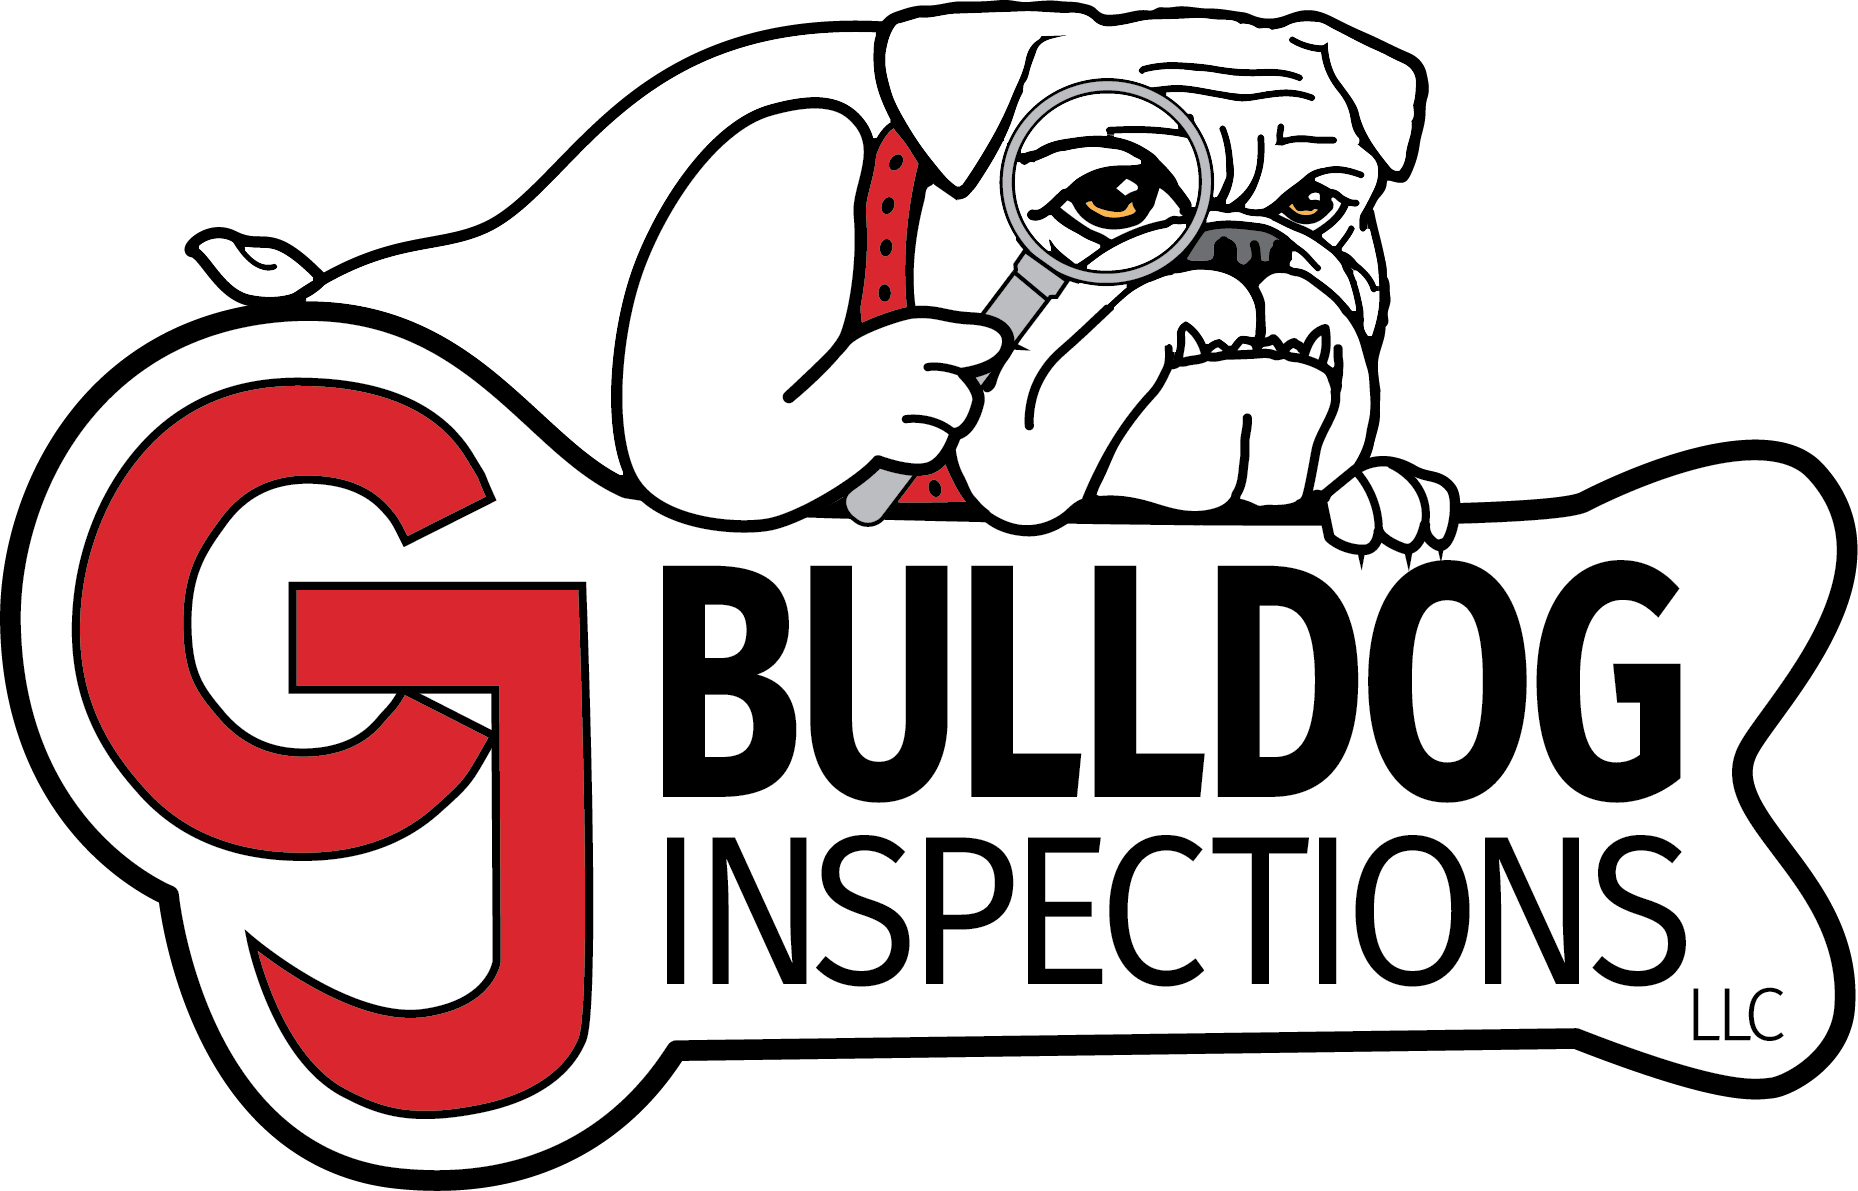 CJ Bulldog Inspections